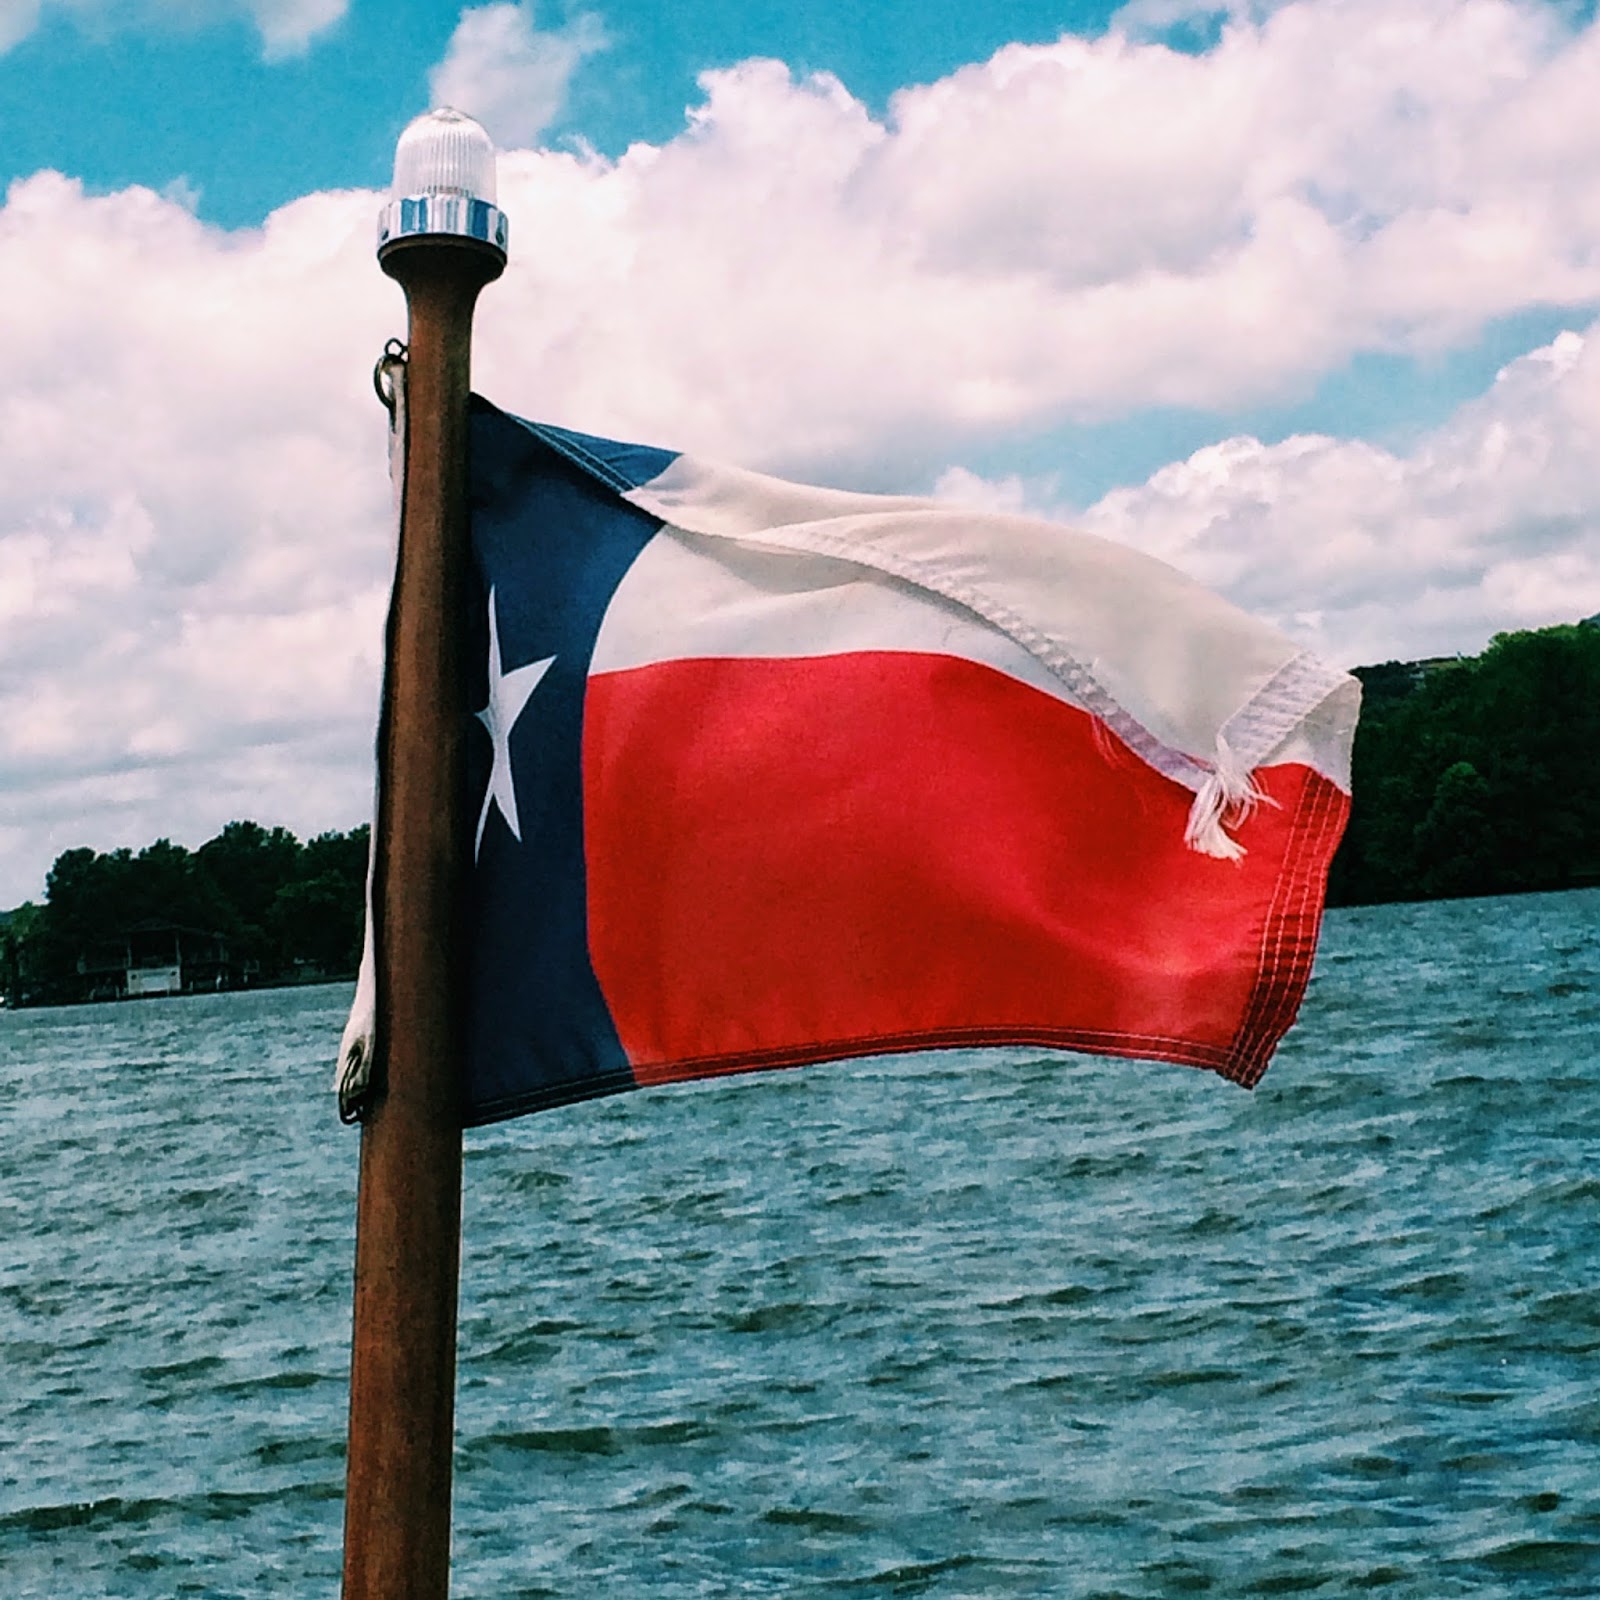 Lake Austin, Lake Austin Texas, Lake Austin Texas Flag, Texas Flag, Lone star Flag, Flag on a Boat. Austin TX, Austin Texas